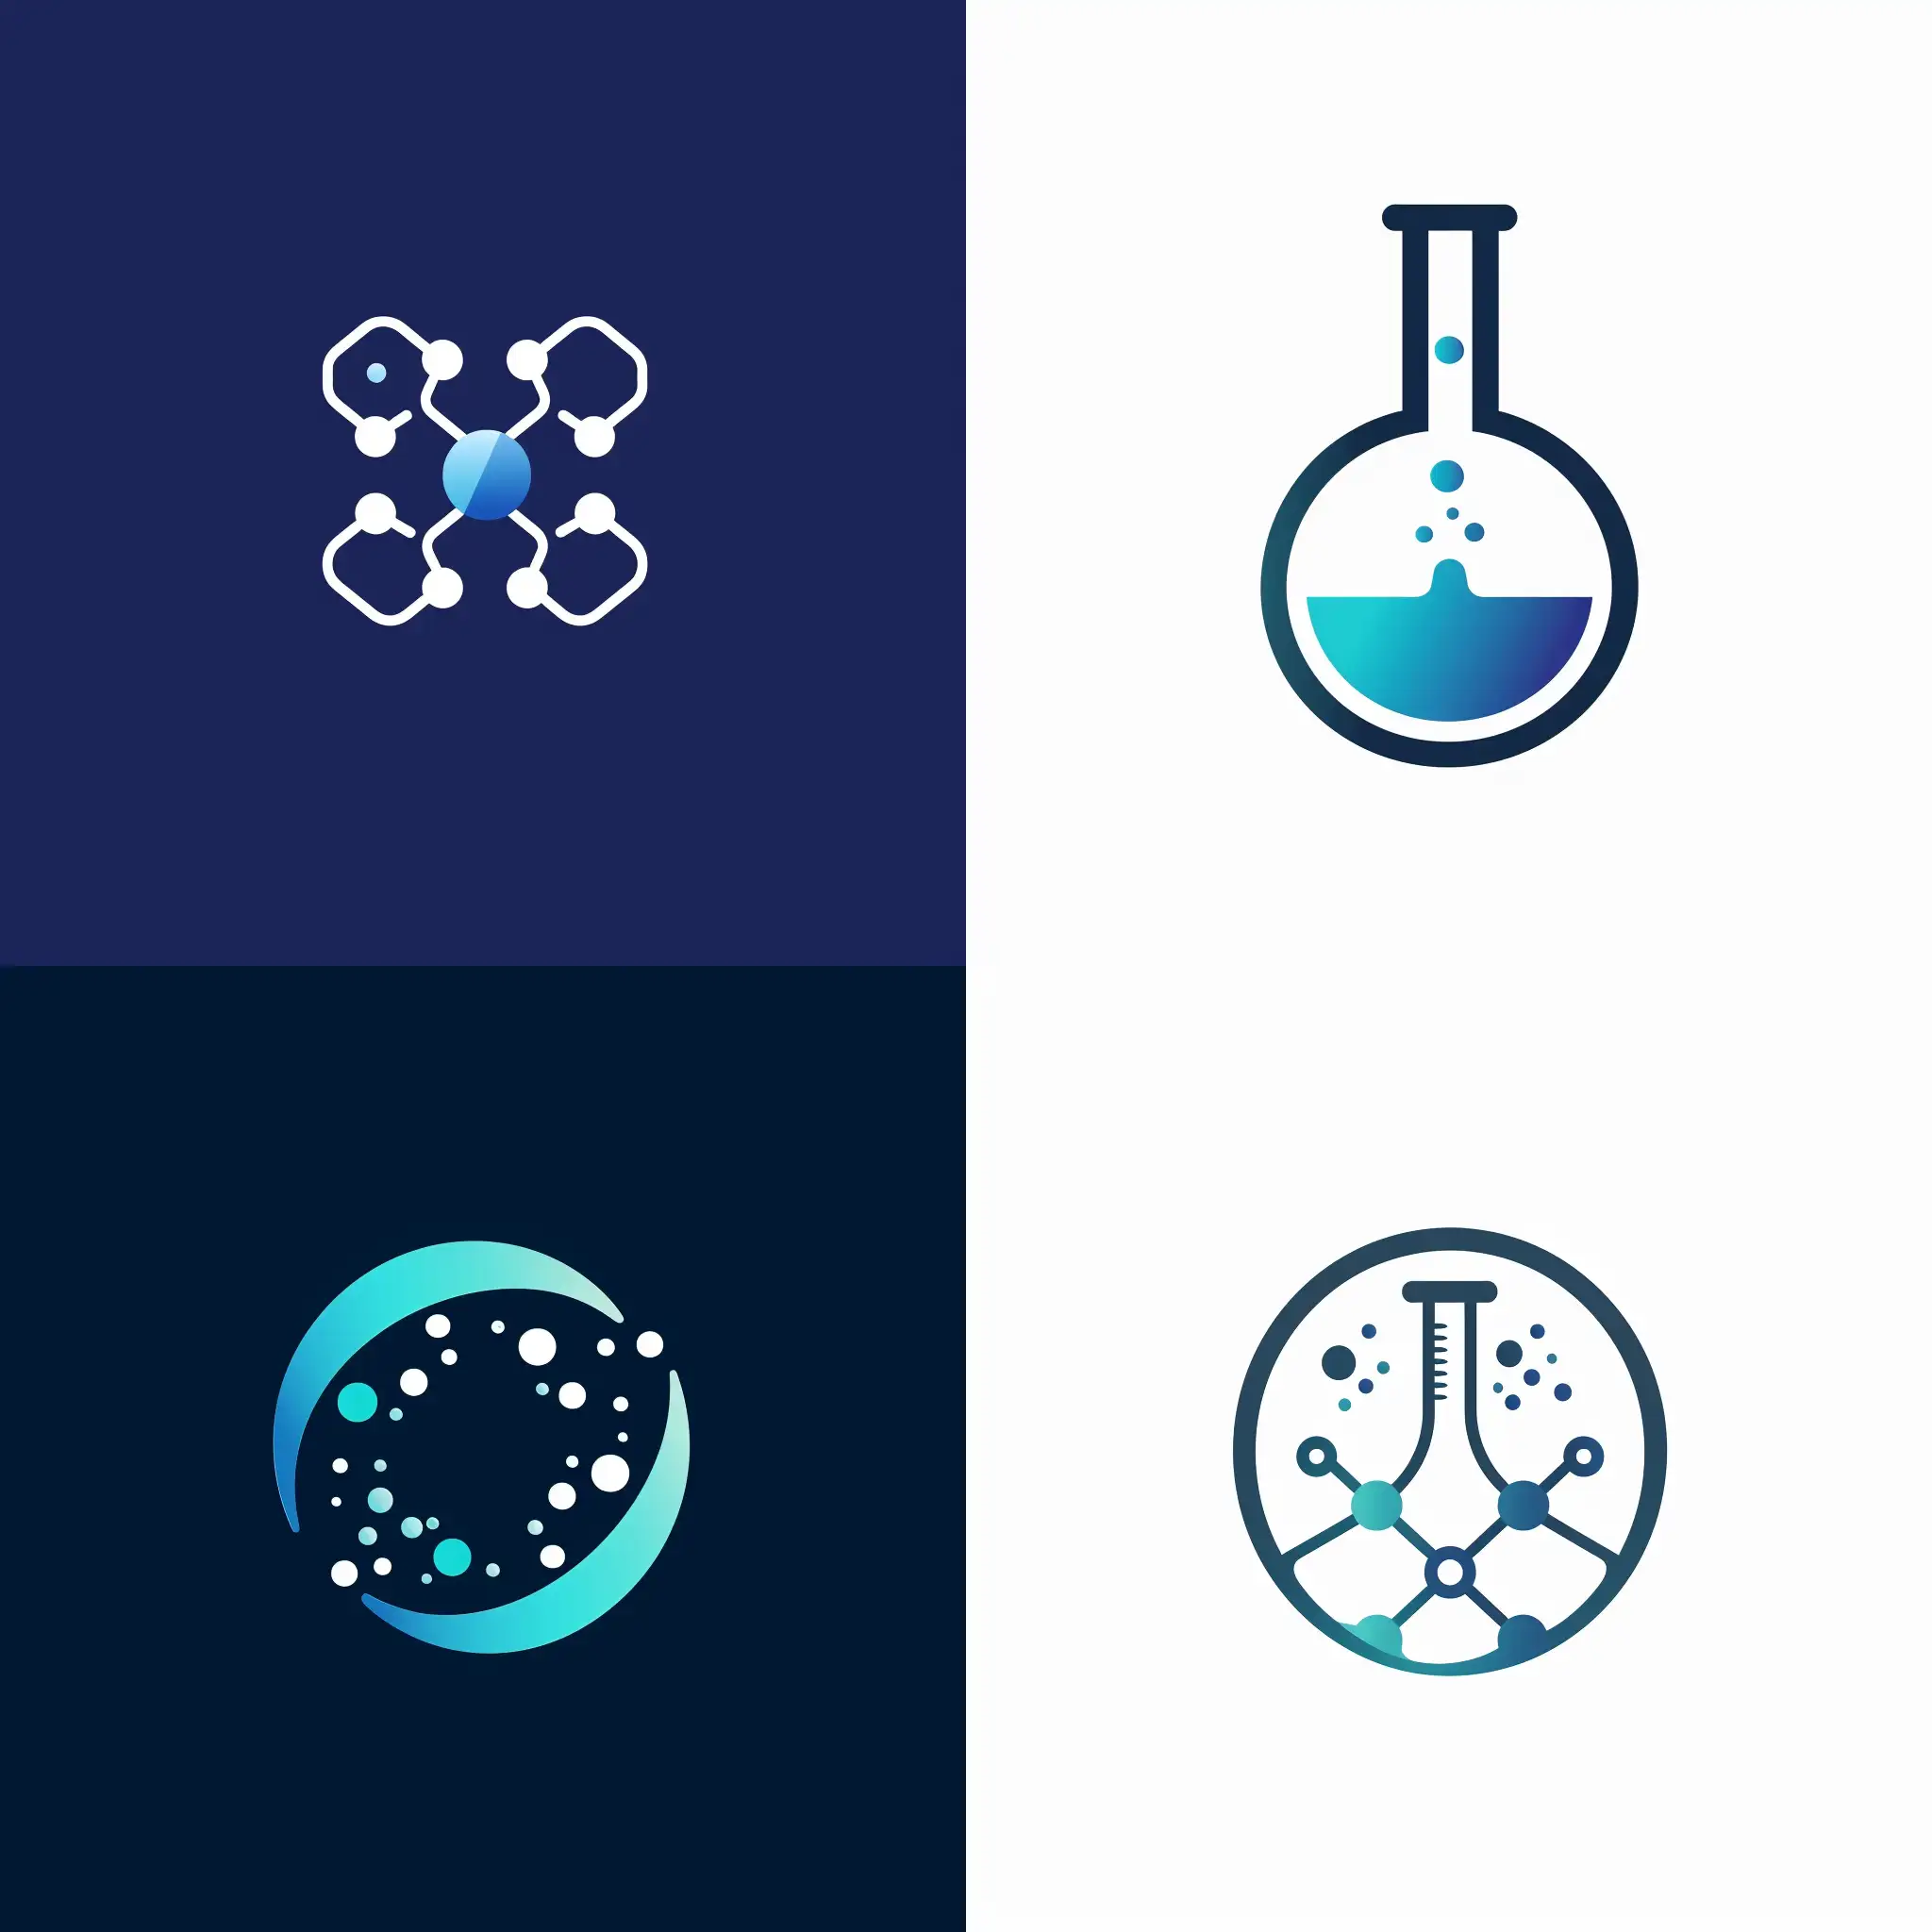 Biomedical-Scientist-Company-Logo-Minimalist-Design-for-Biocompatible-Medical-Devices